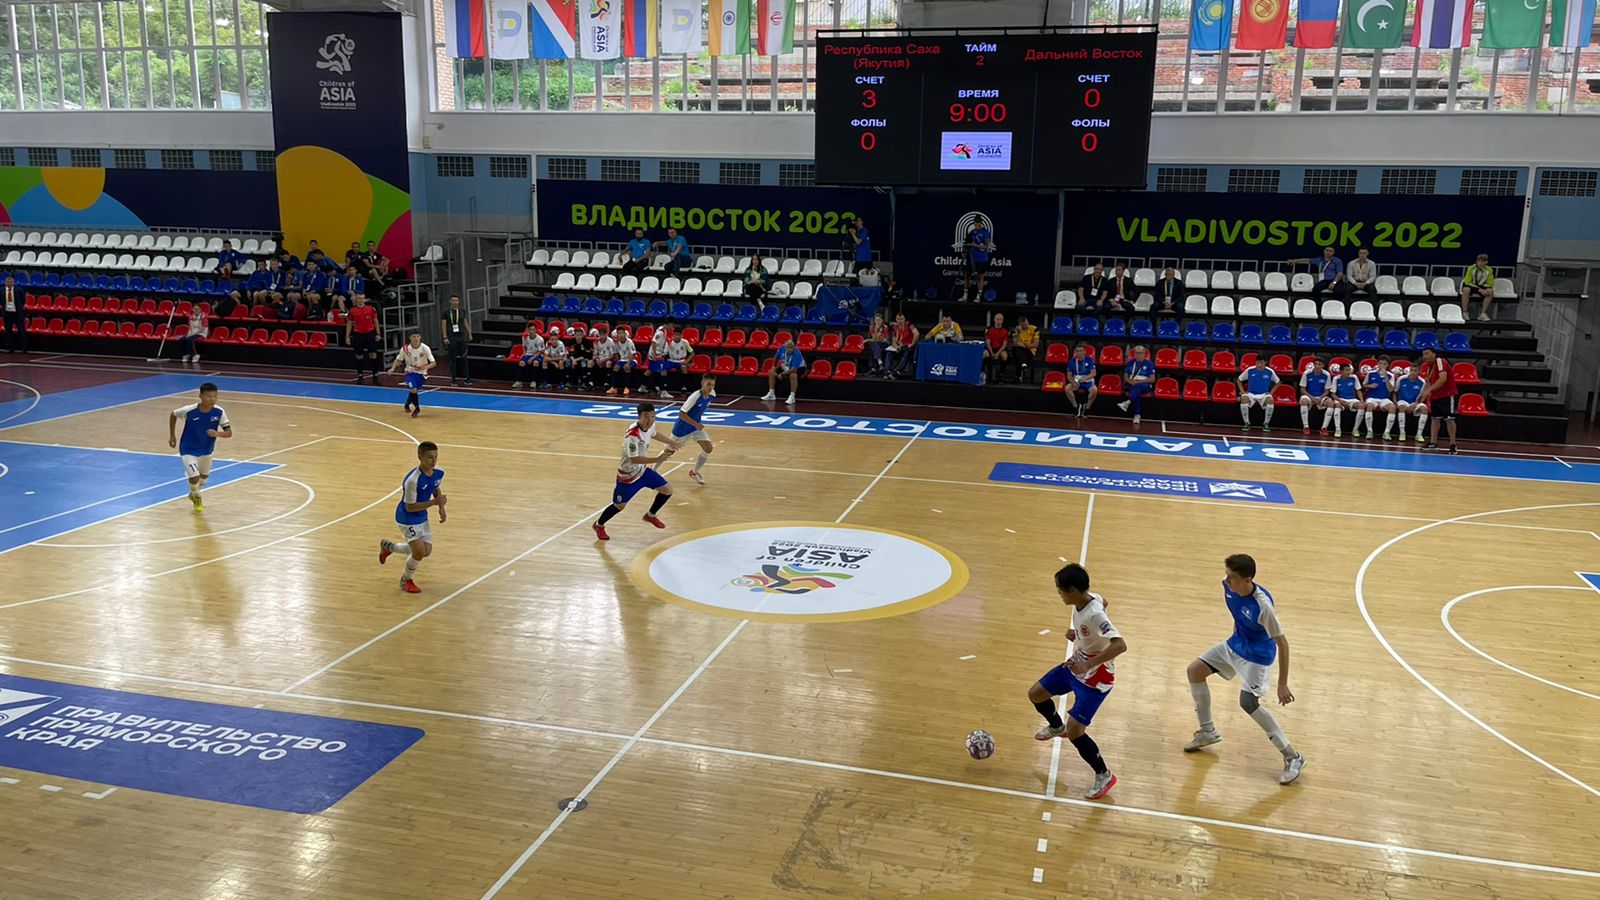 Пять матчей по мини-футболу предстоят якутской команде на Детях Азии